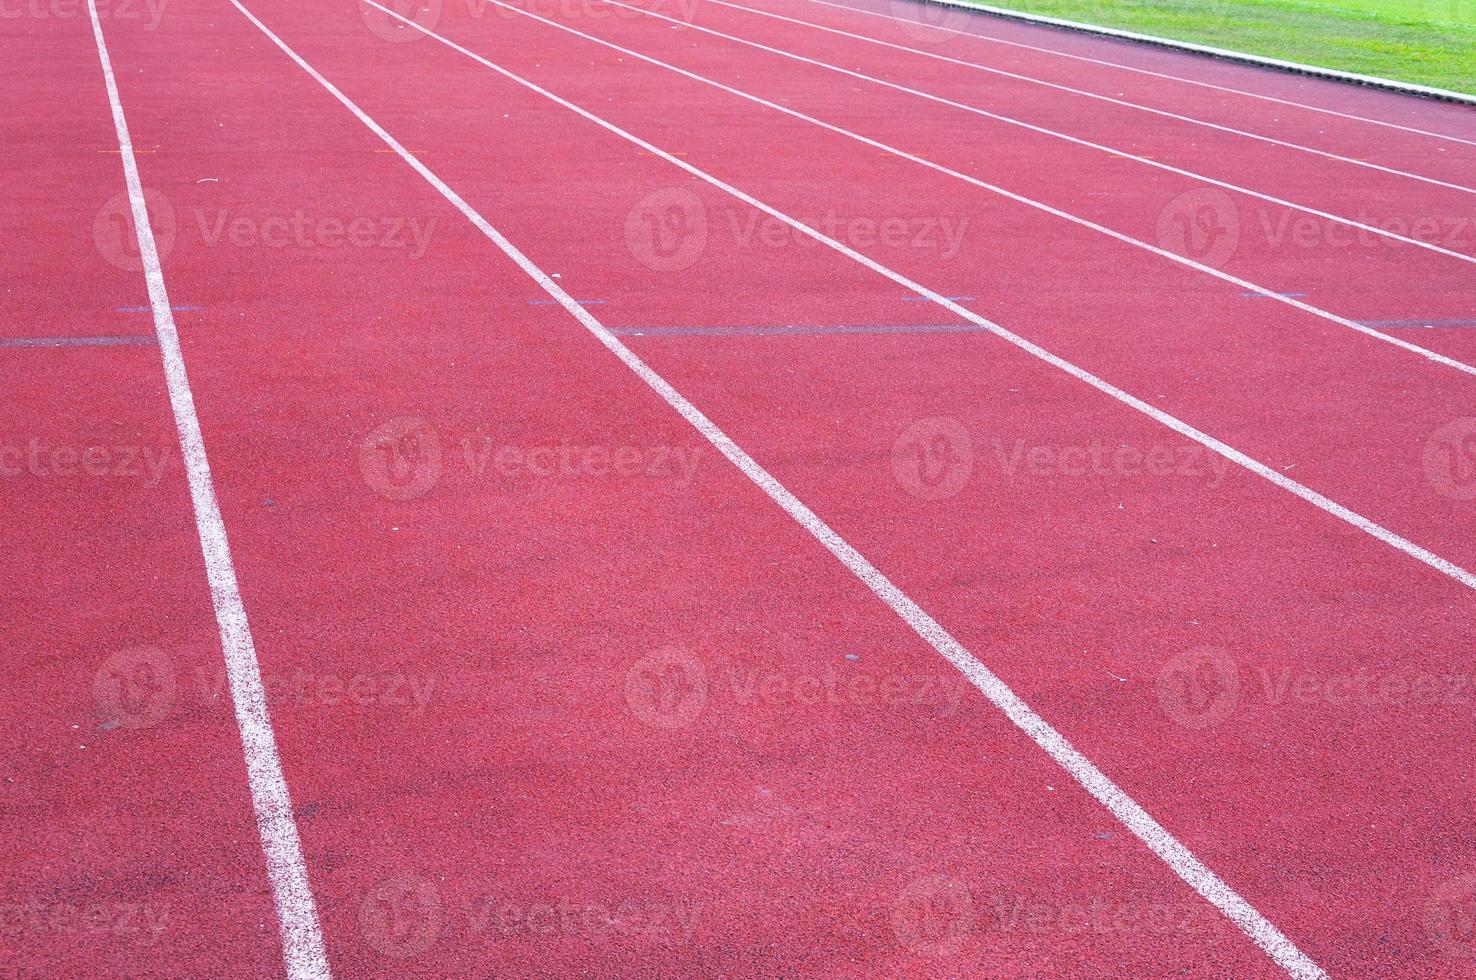 corrida rastrear e verde grama, direto atletismo corrida rastrear às esporte estádio foto